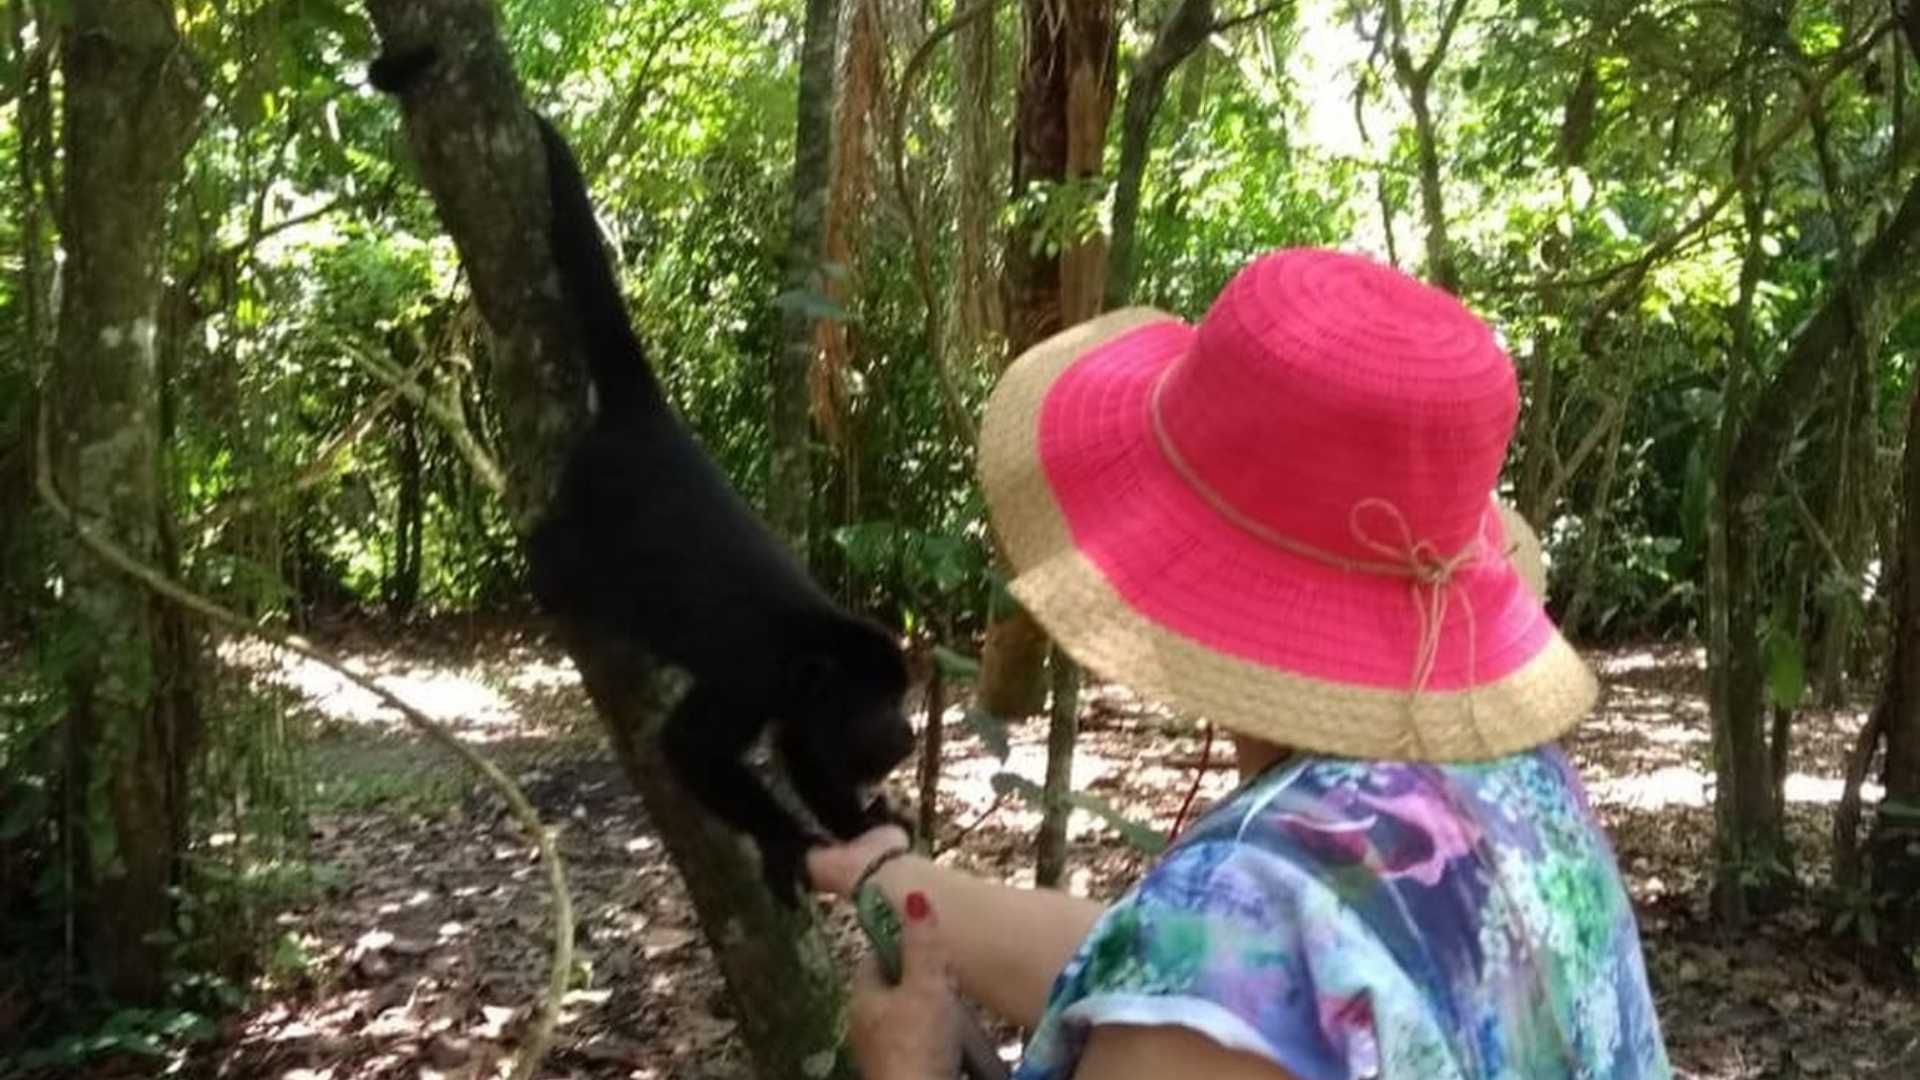 A woman on a monkey excursion in Belize